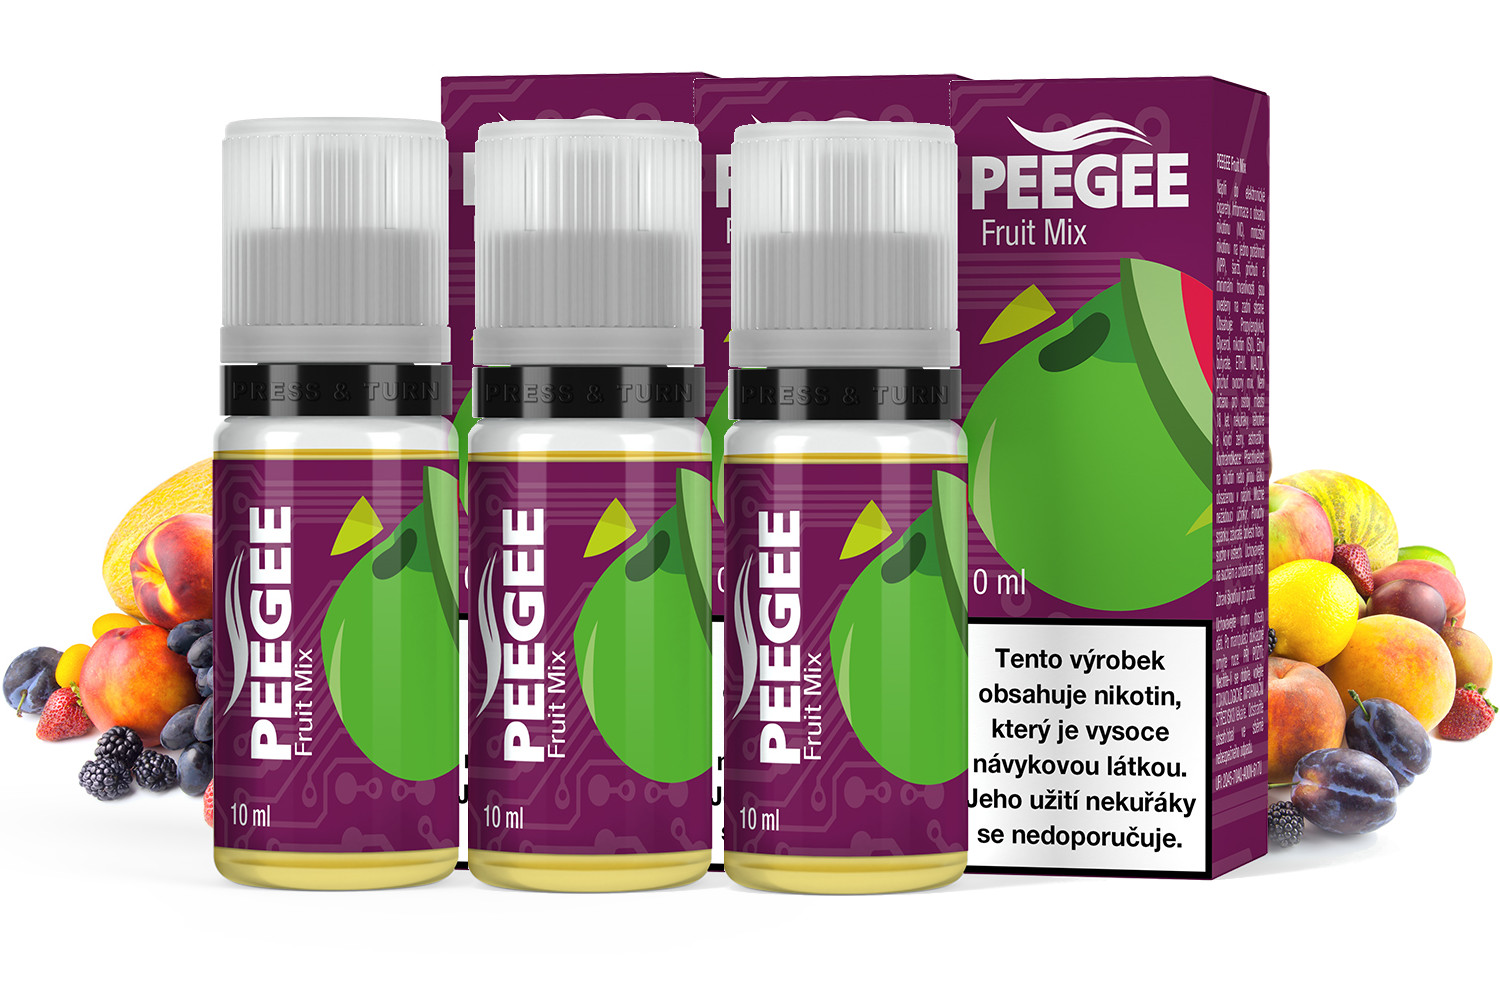 PEEGEE - Ovocná směs (Fruit Mix) 3x10ml Obsah nikotinu: 12mg